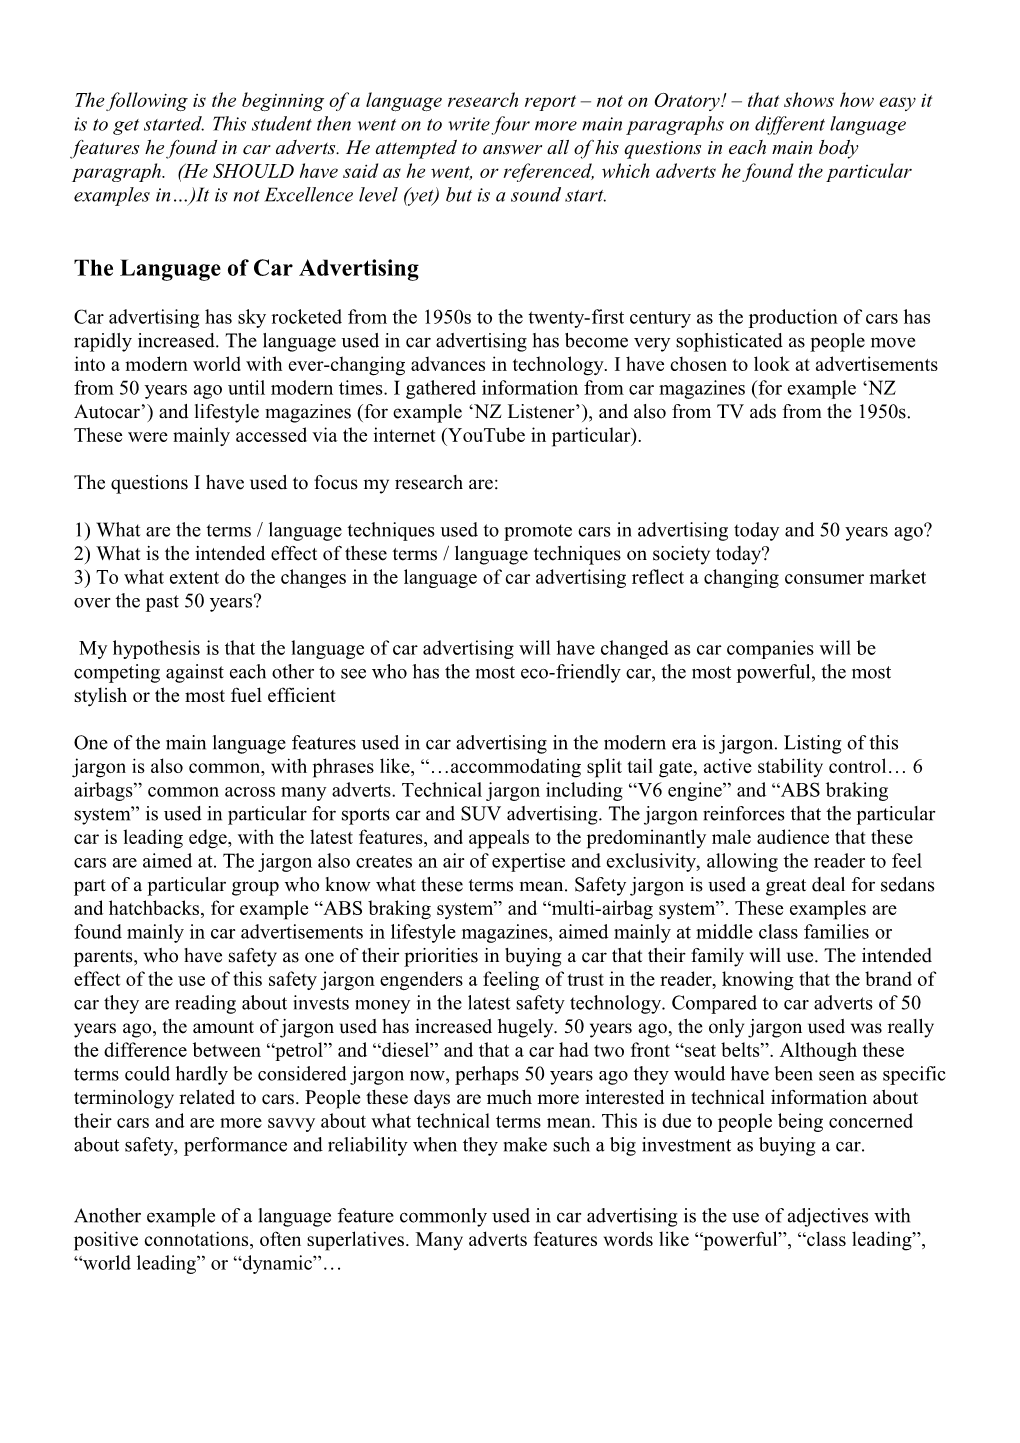 The Language of Car Advertising